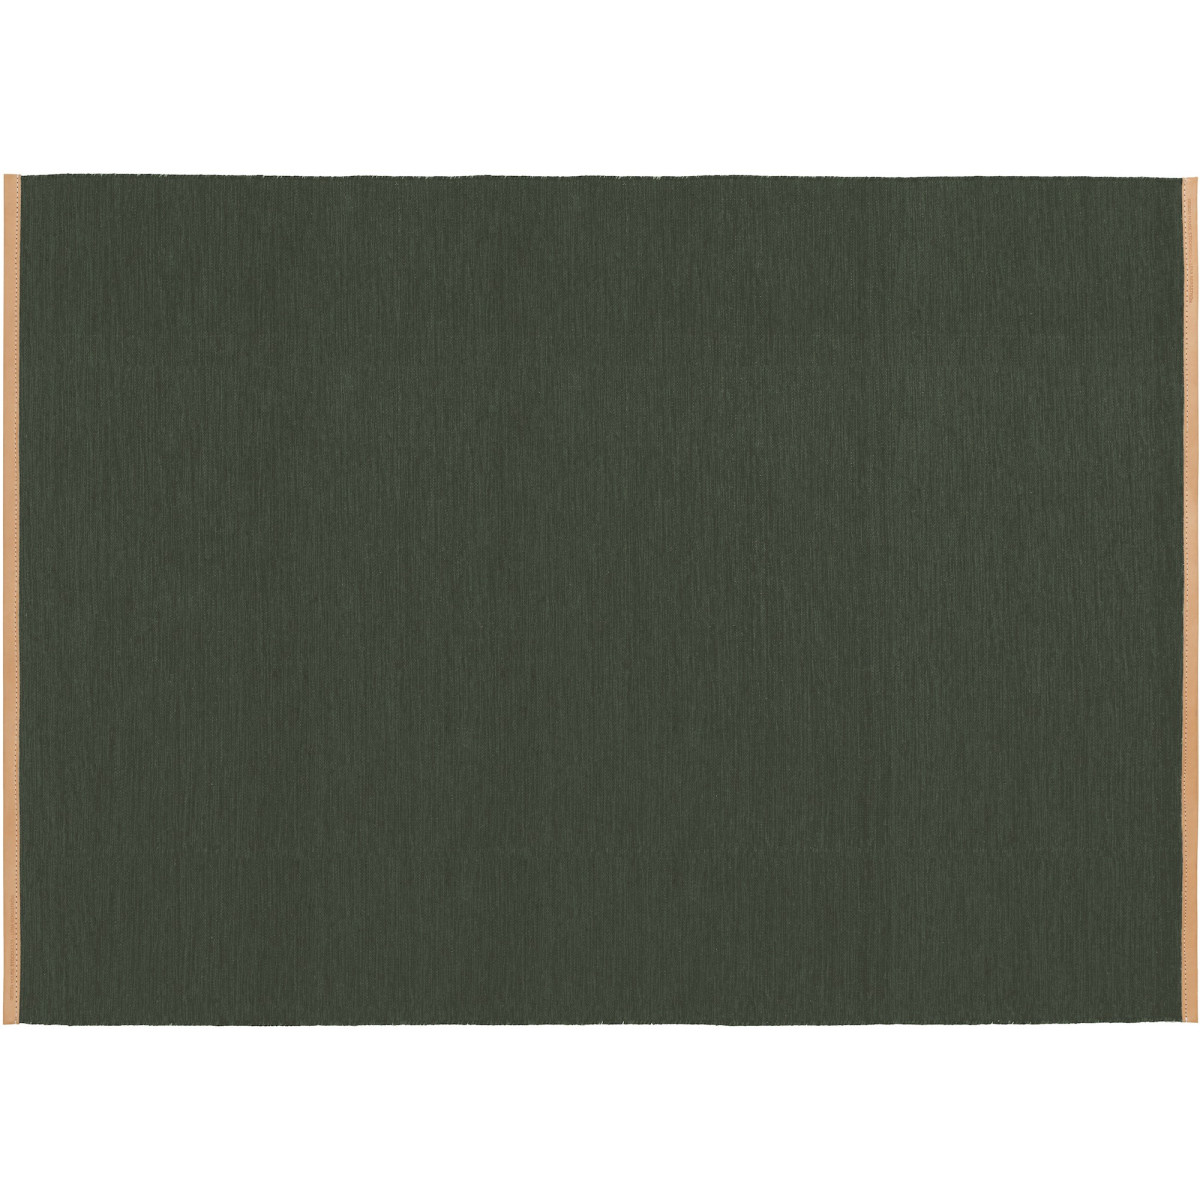 Björk rug – 170x240cm – Dark green